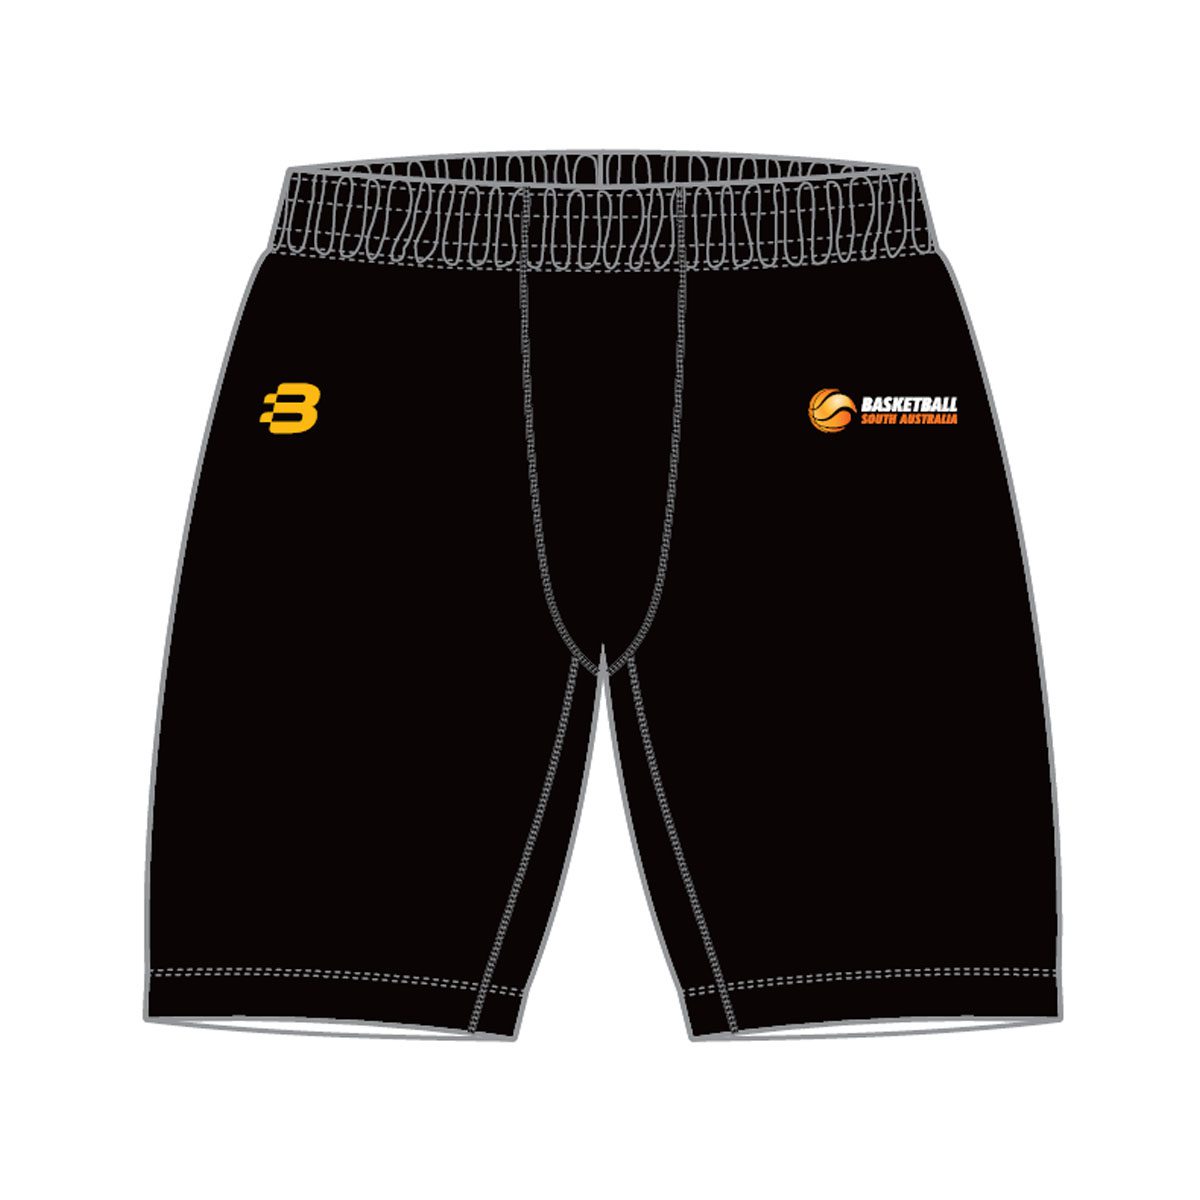 Basketball SA SPP Player - Compression Shorts - Men's - Youth